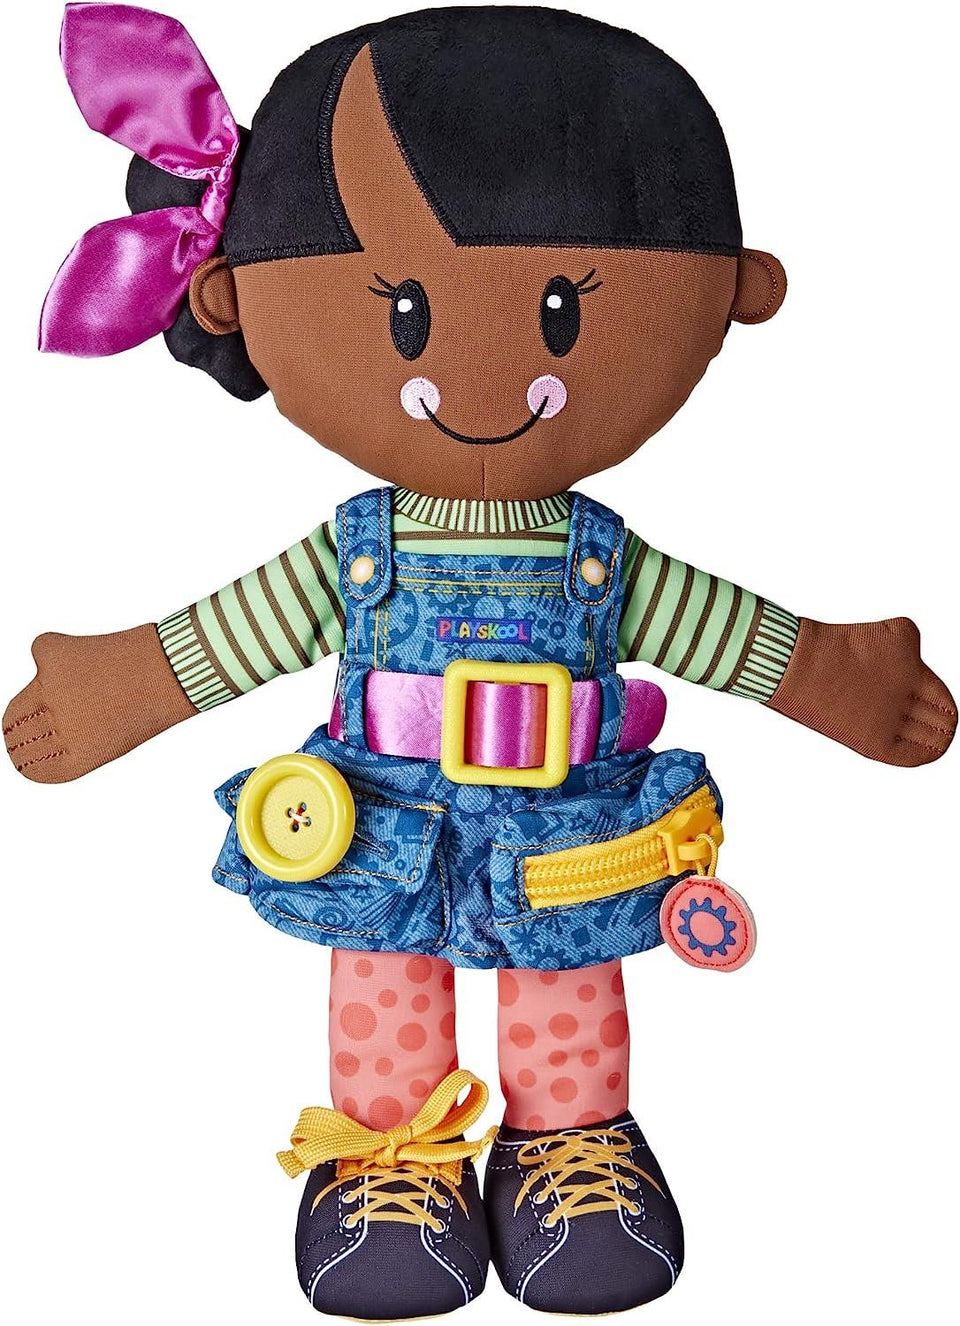 Playskool Dressy Kids Girl African American Doll Interactive Learn Dressing Practice Hasbro